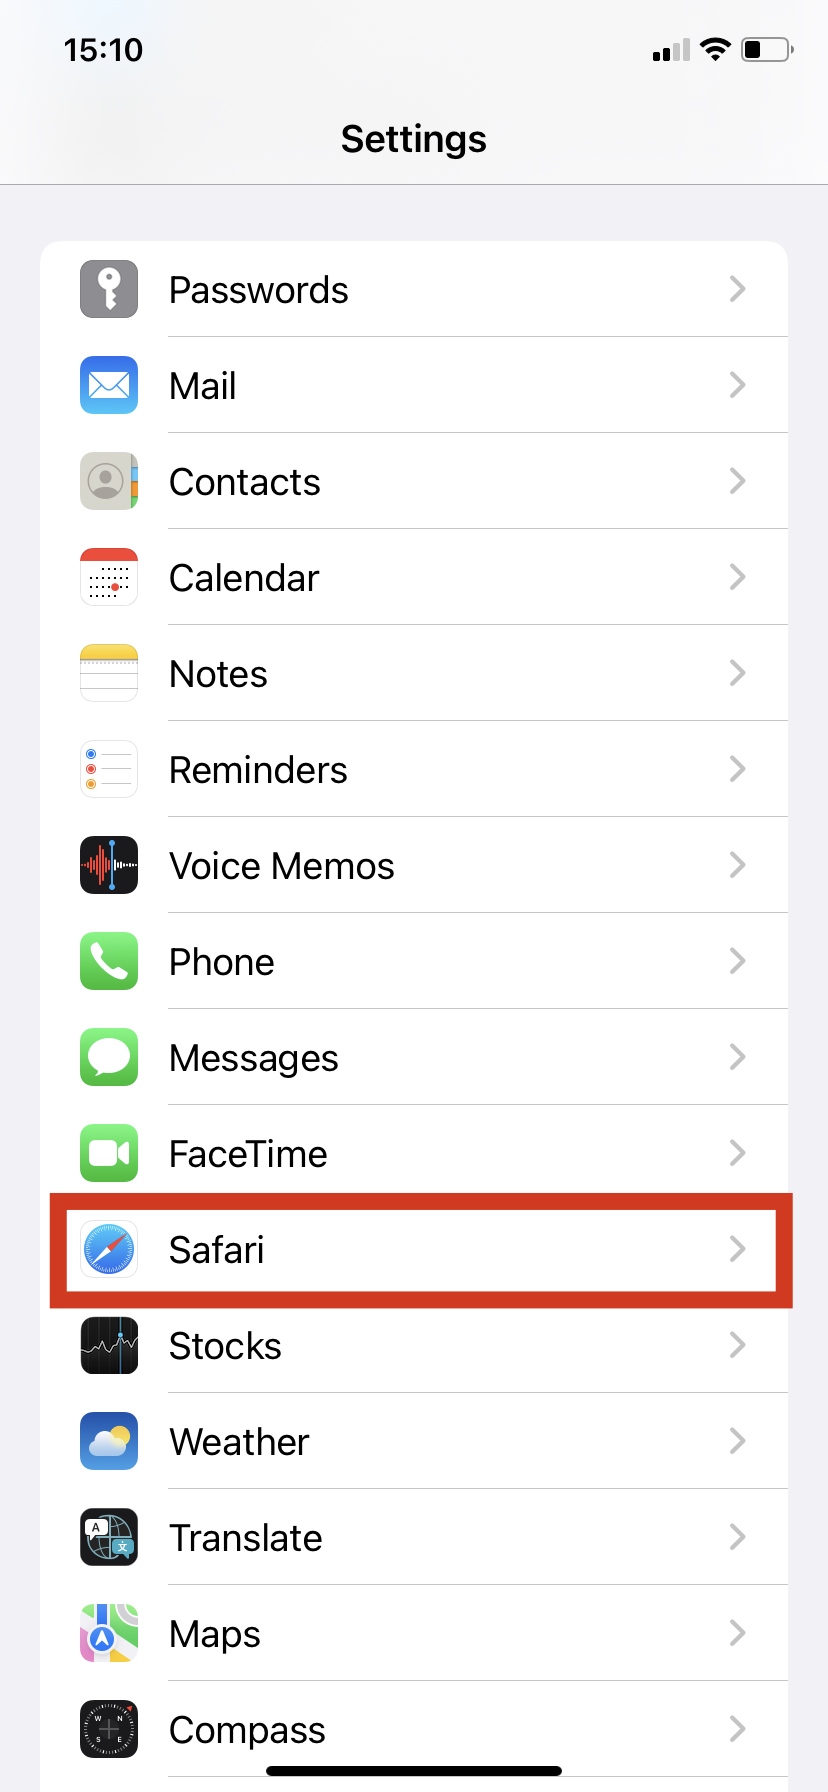 Выберите "Safari" *mobile_border